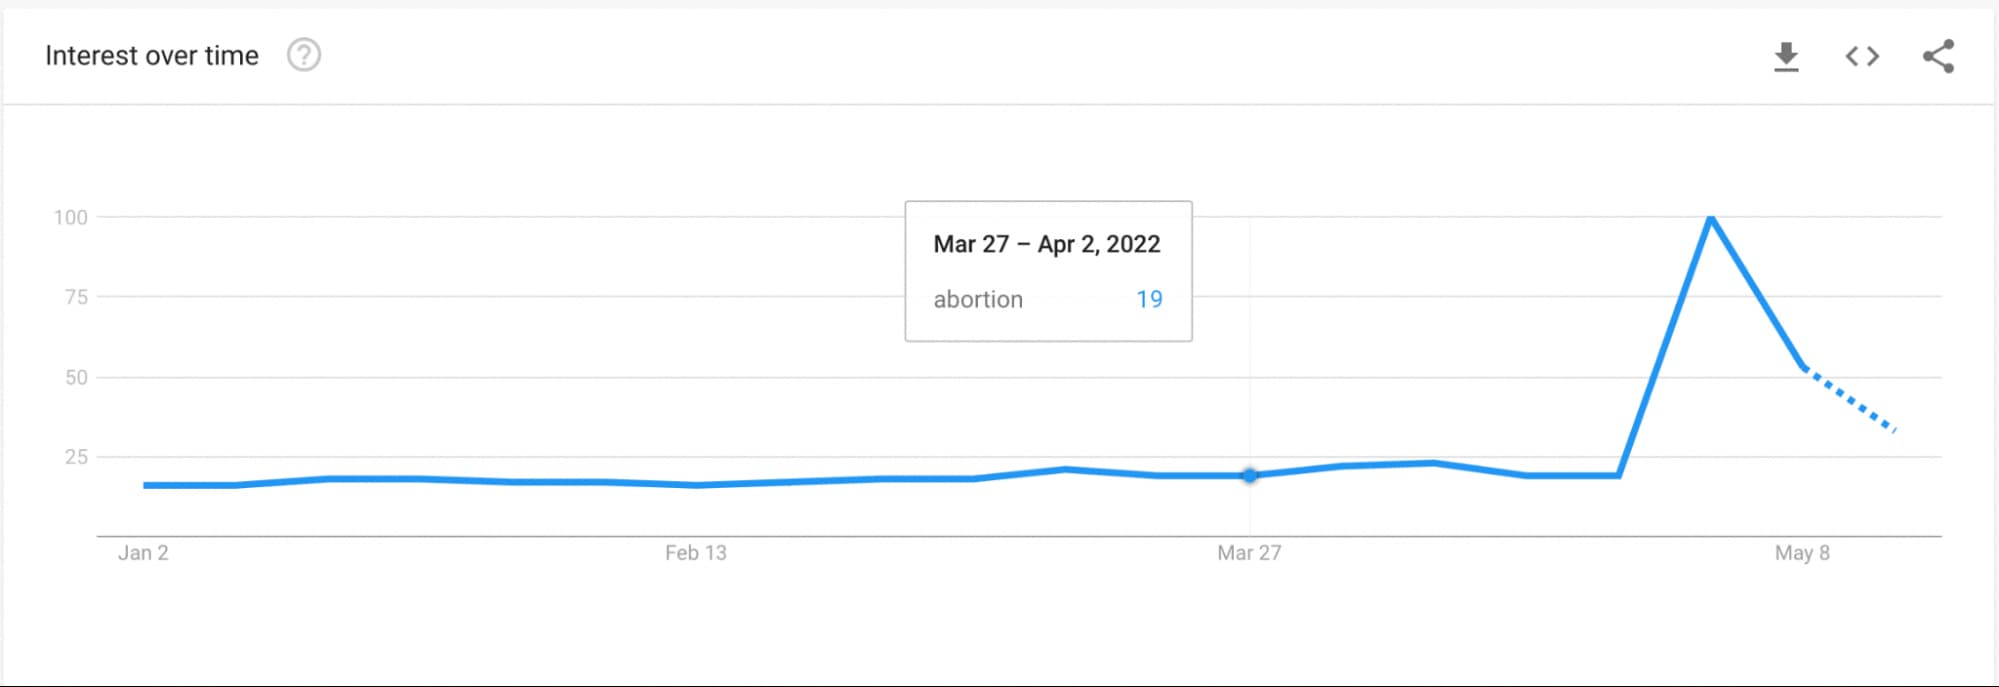 Google Trends: 2022 interest in “Abortion”